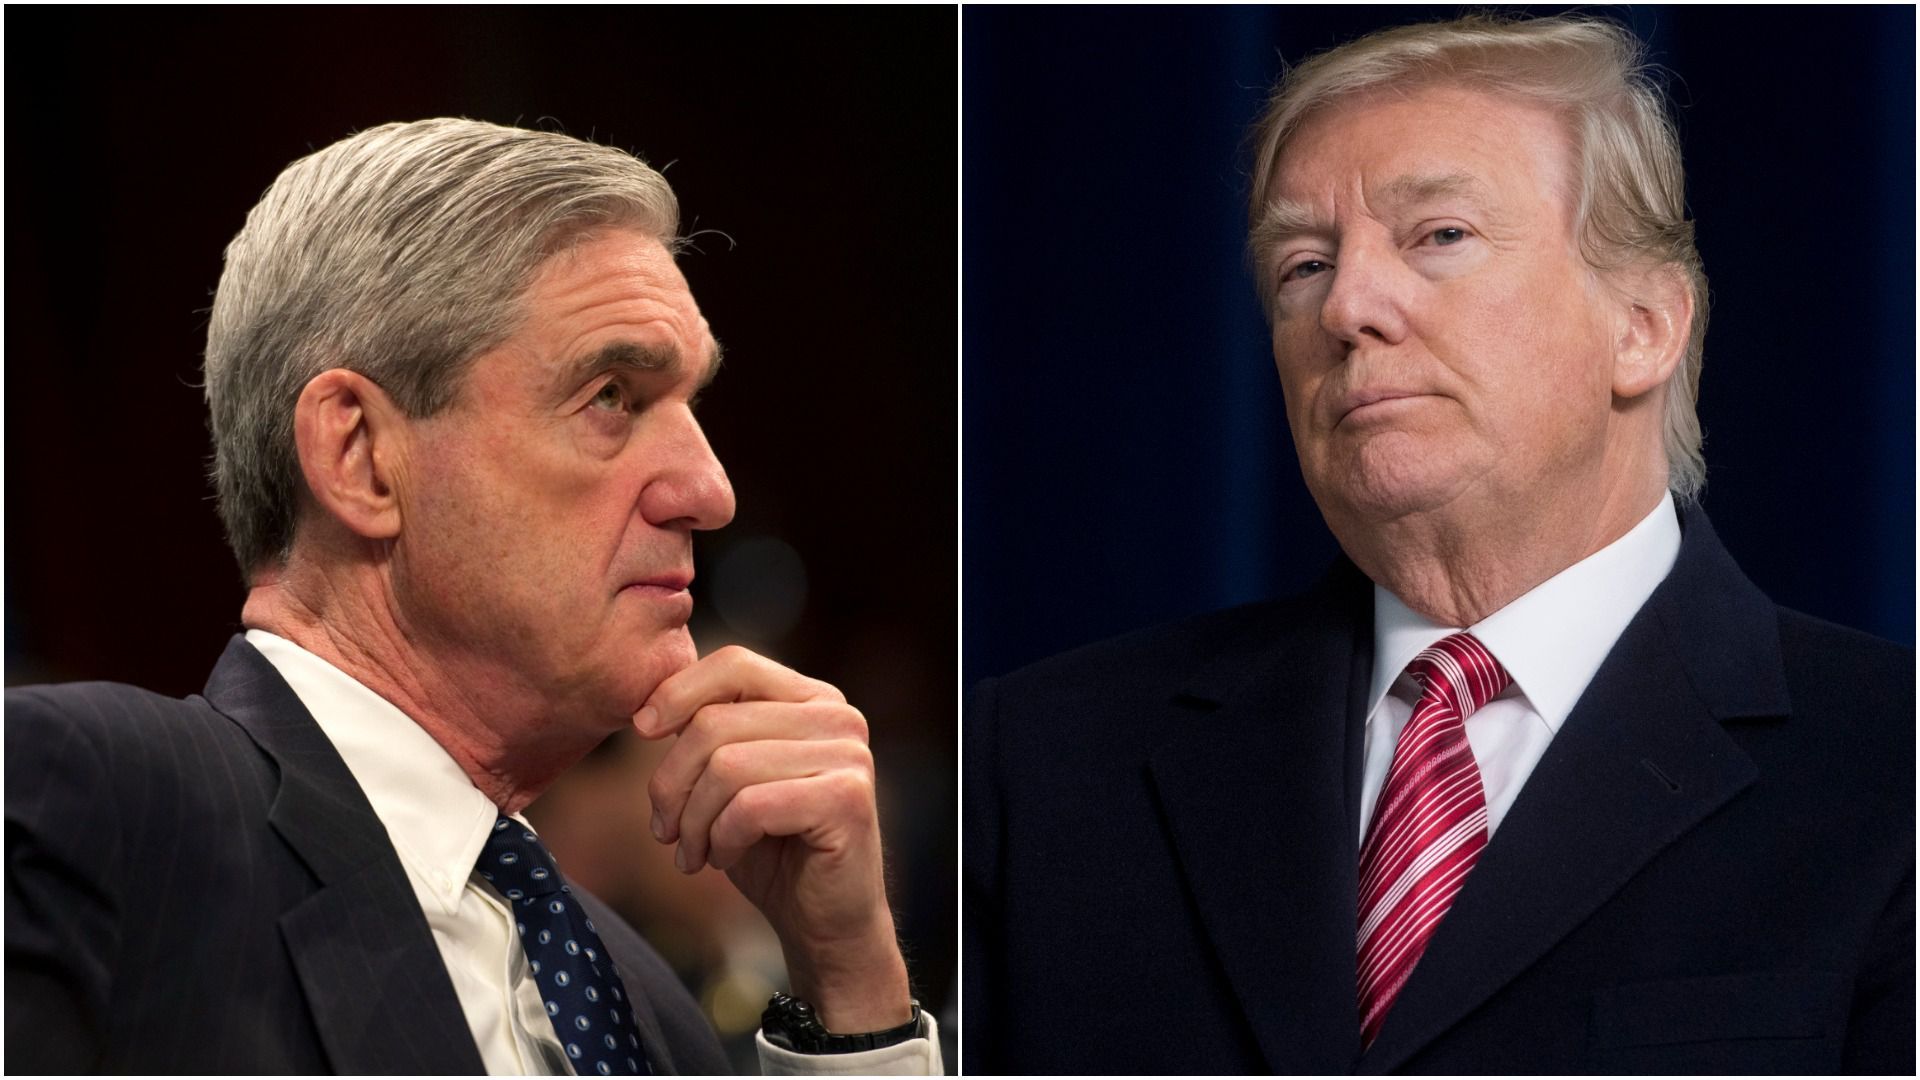 A split image of Robert Mueller and President Trump